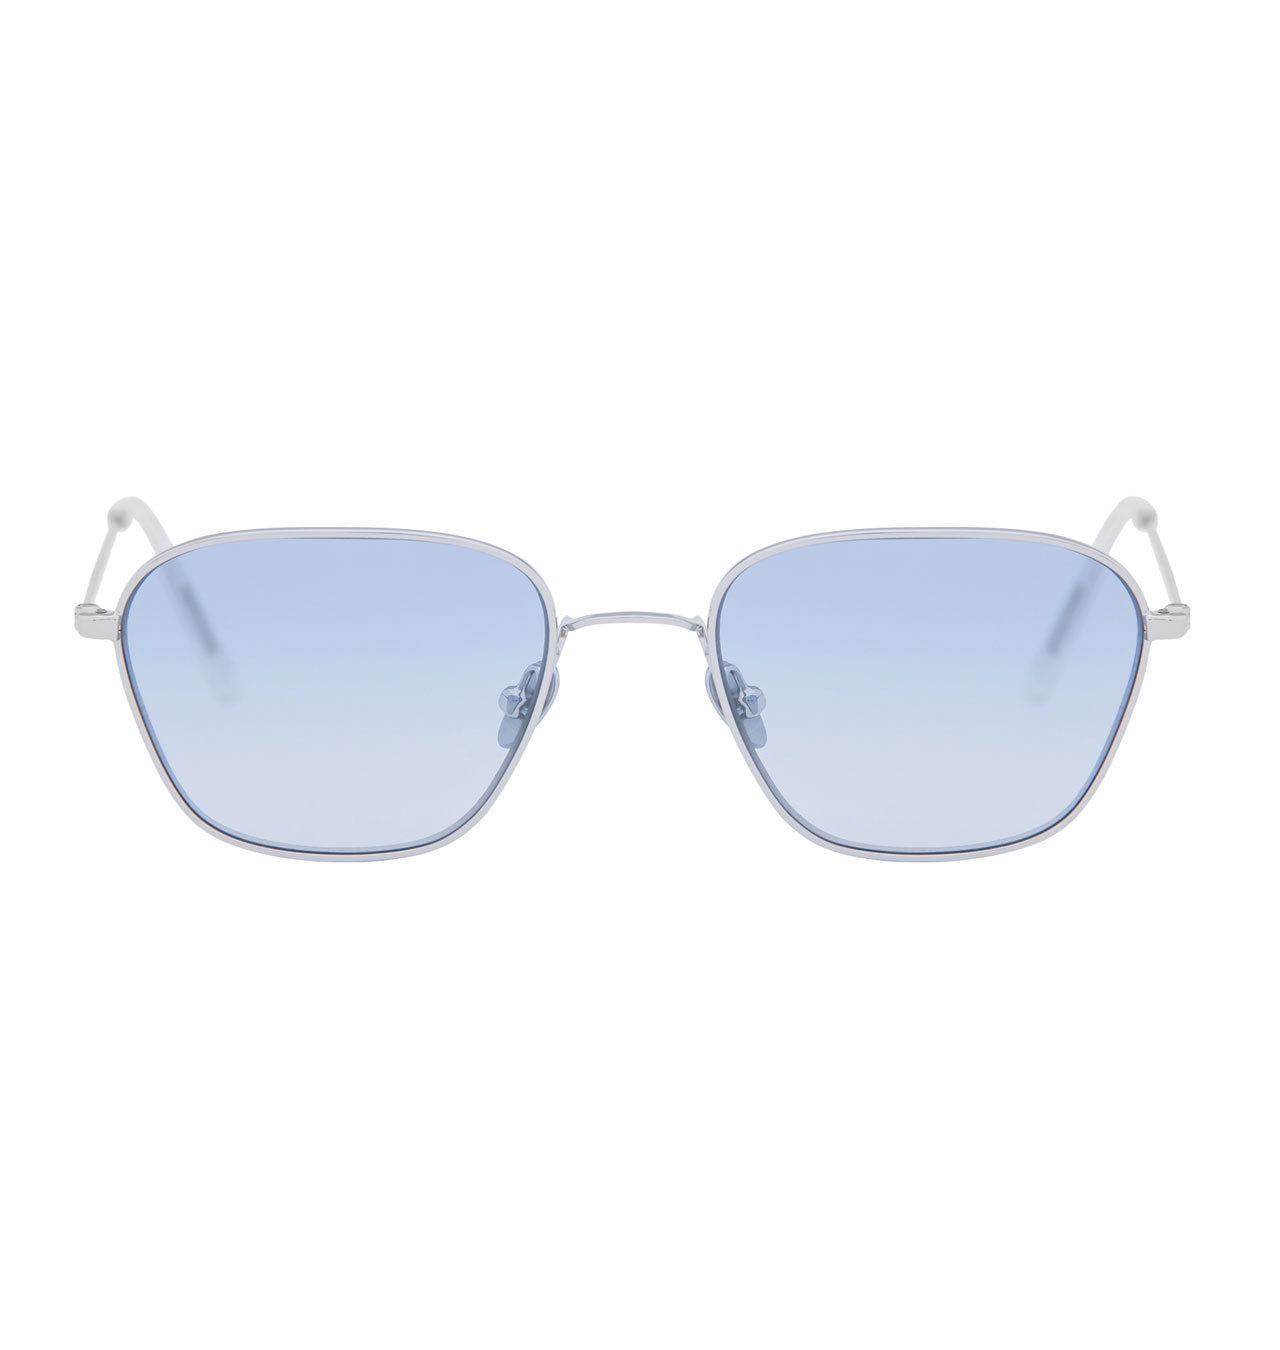 Monokel Eyewear - Otis Silver Sunglasses - Blue Gradient Lens